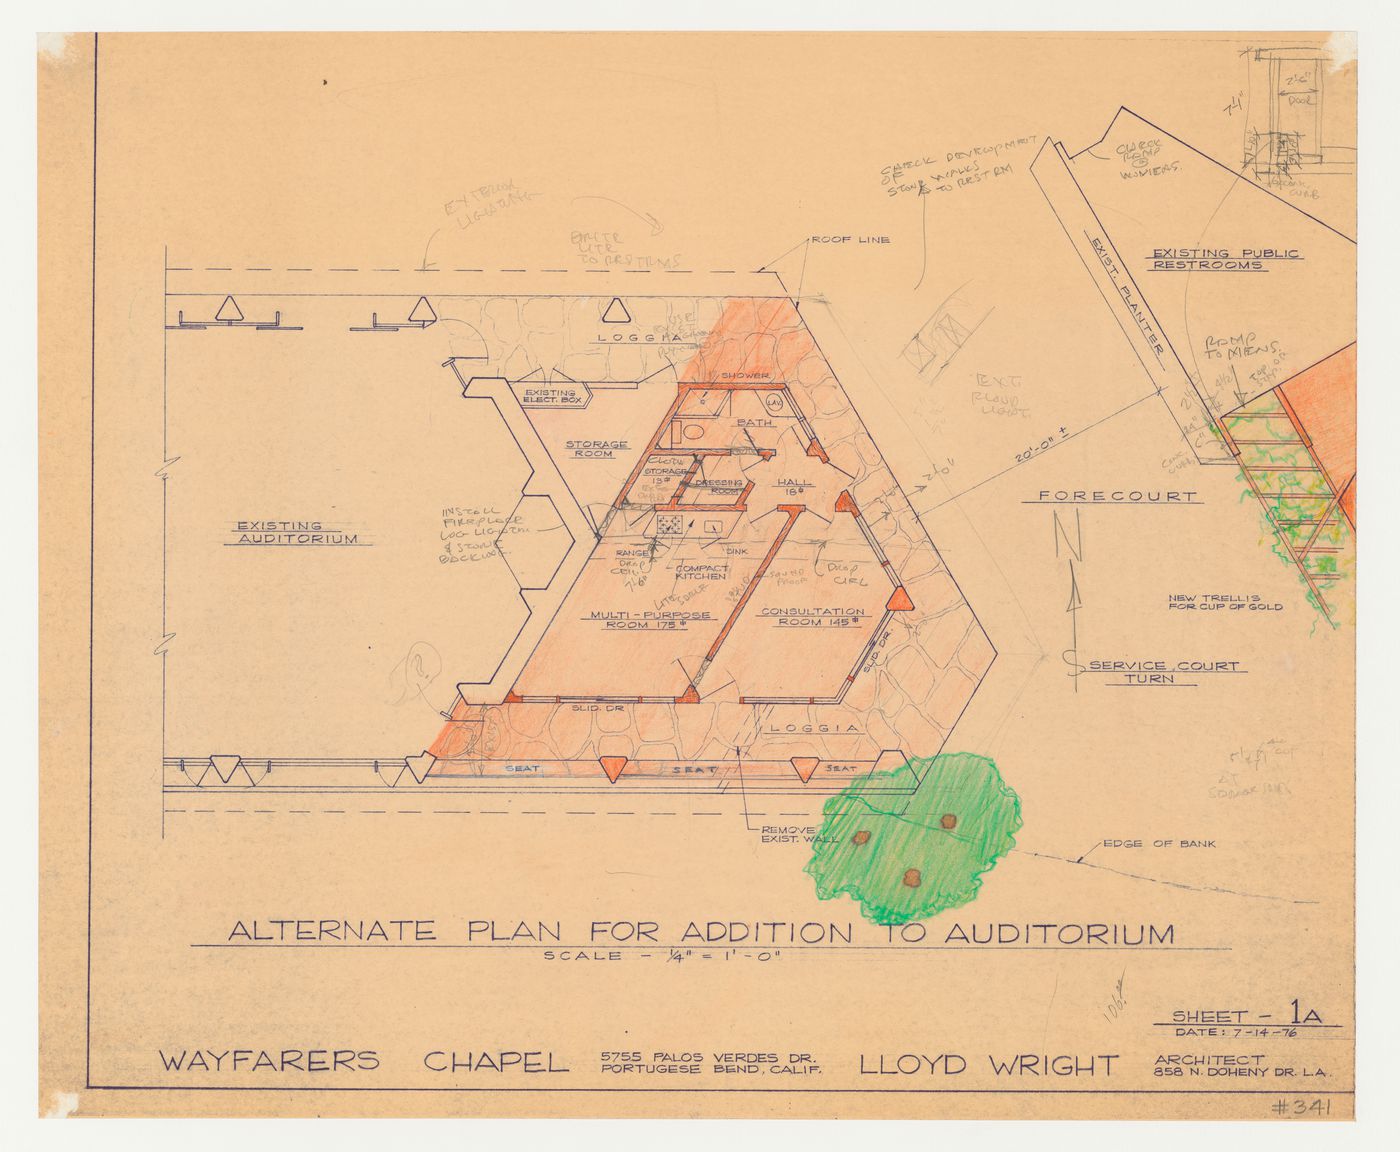 Wayfarers' Chapel, Palos Verdes, California: Plan for the auditorium addition